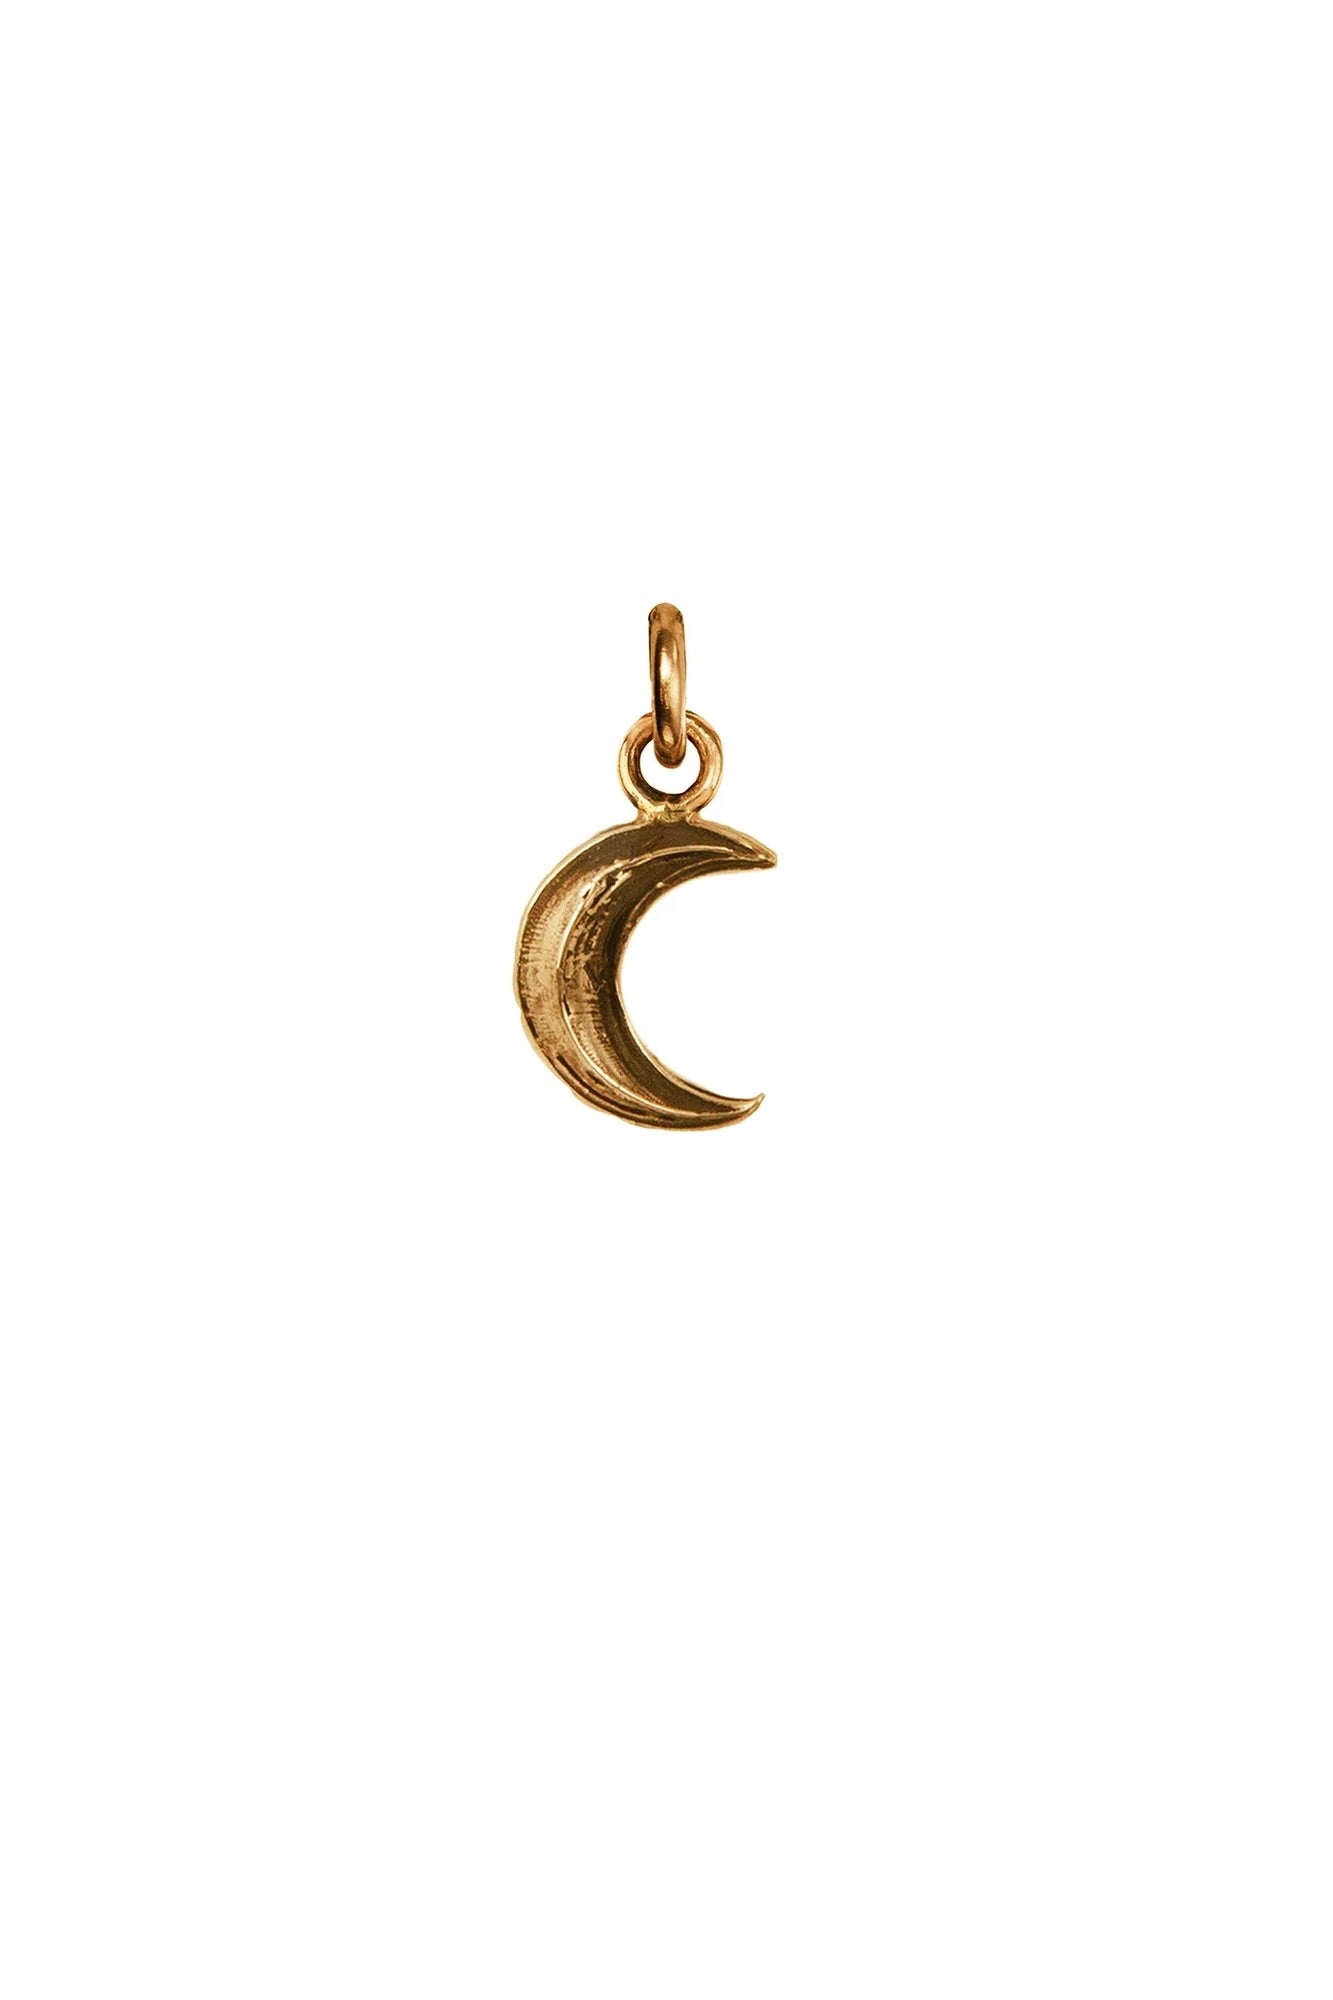 Pyrrha Crescent Moon Symbol Charm / Bronze